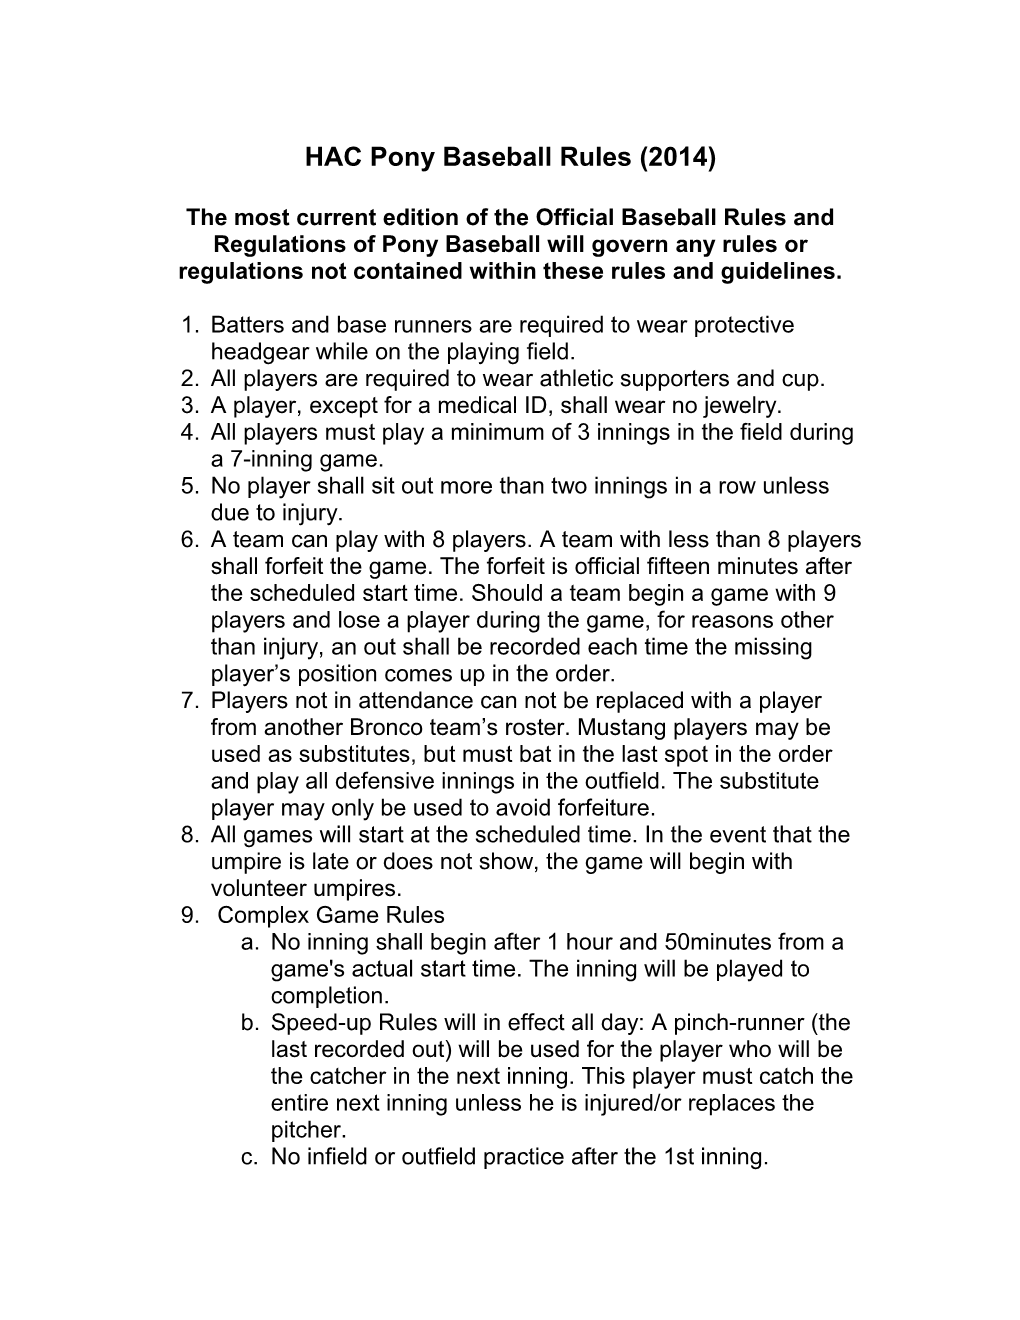 HAC Pony Baseball Rules (2011)